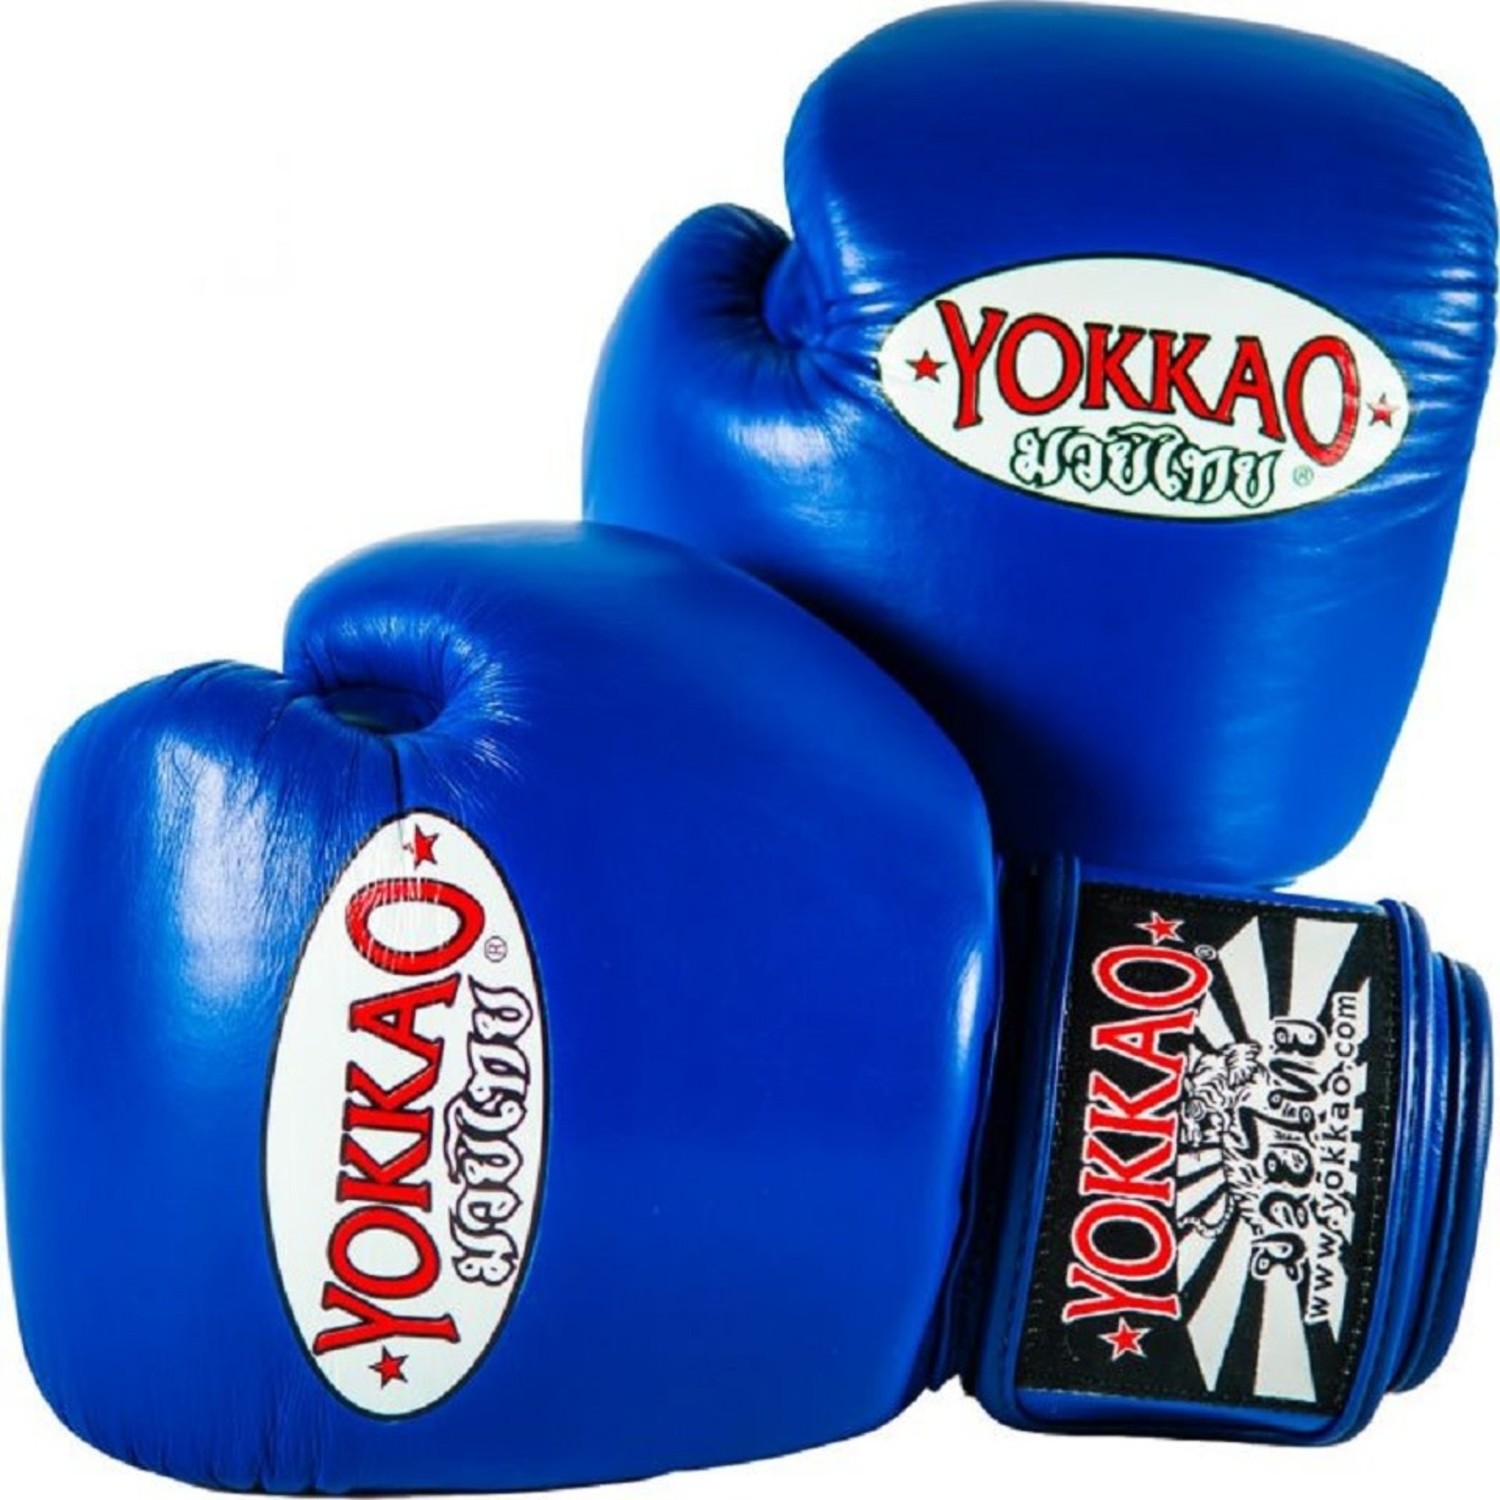 Yokkao Boxing Gloves Blue - Enso Martial Arts Shop Bristol